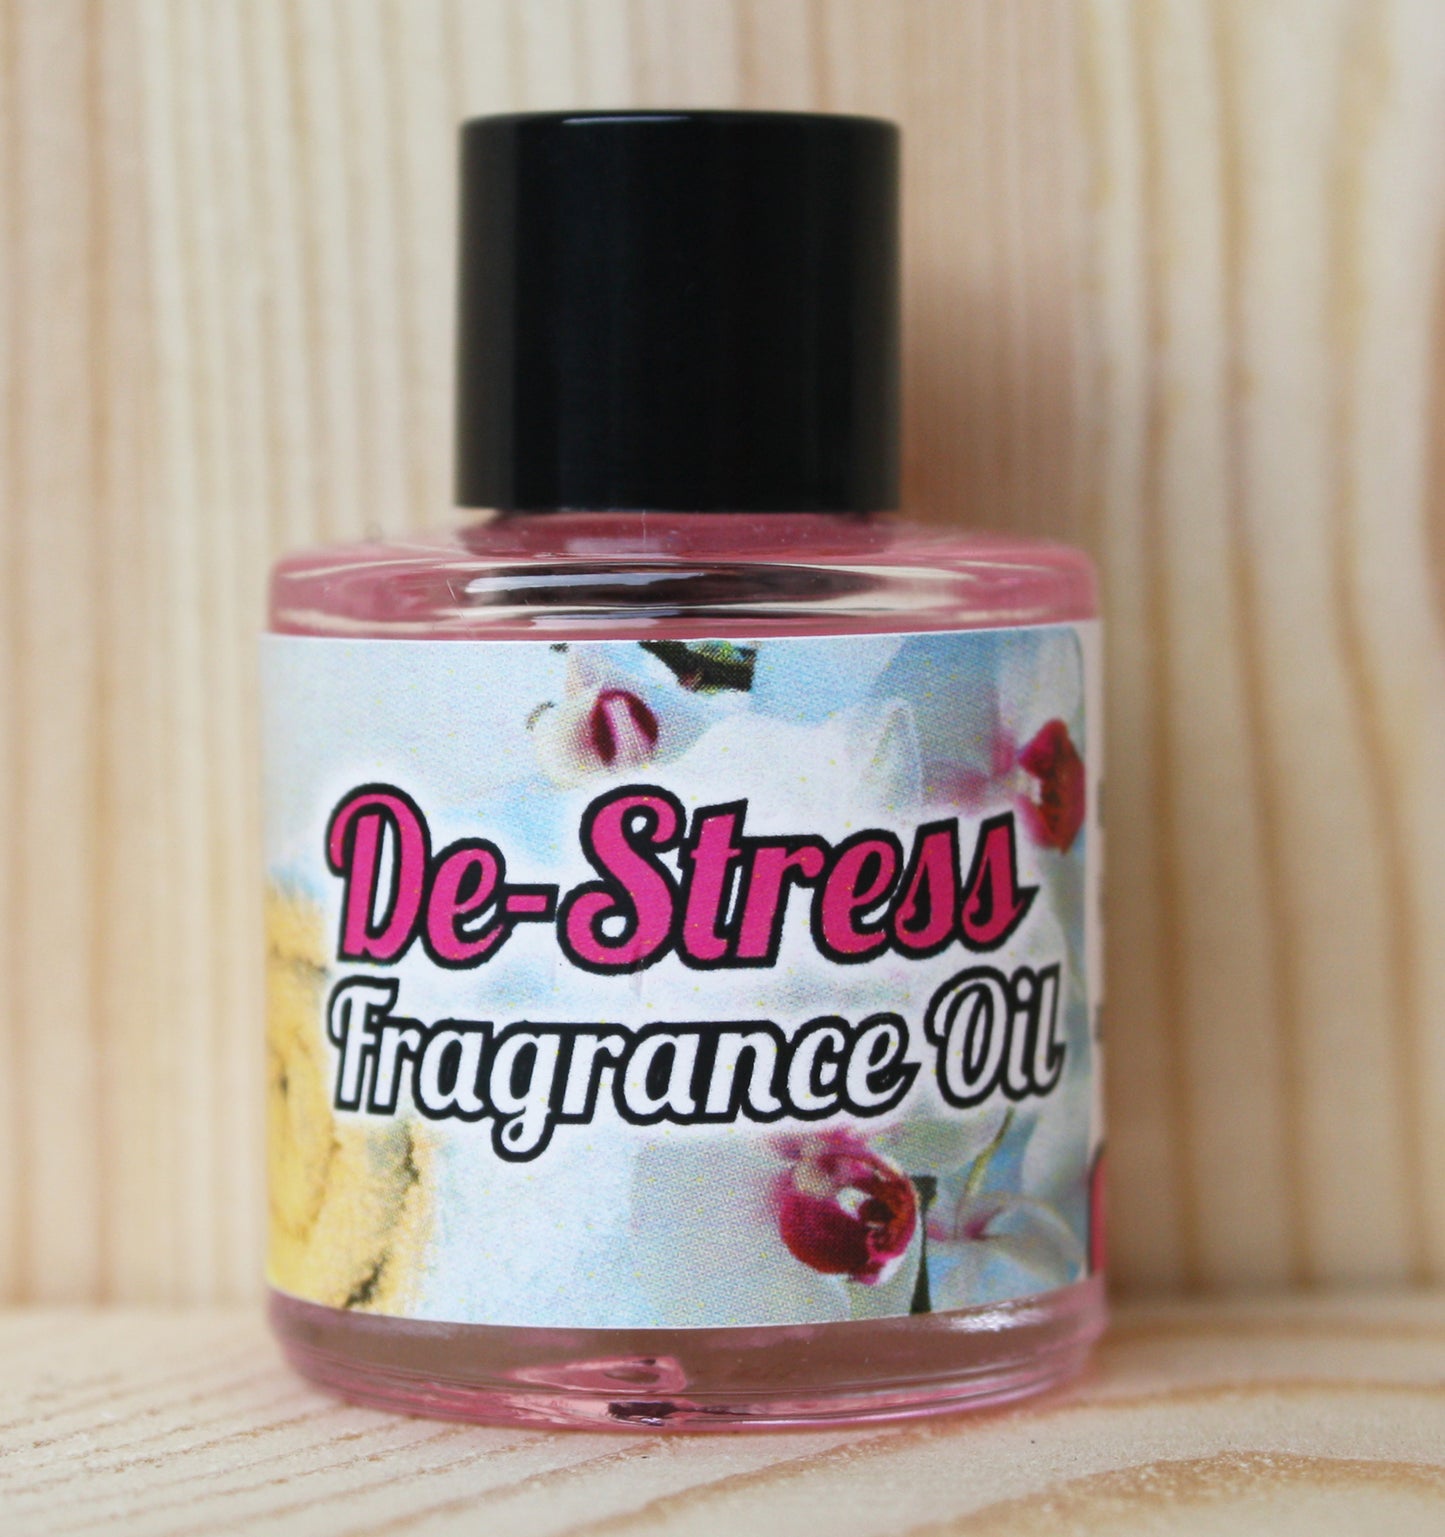 De-Stress Fragrance Oil